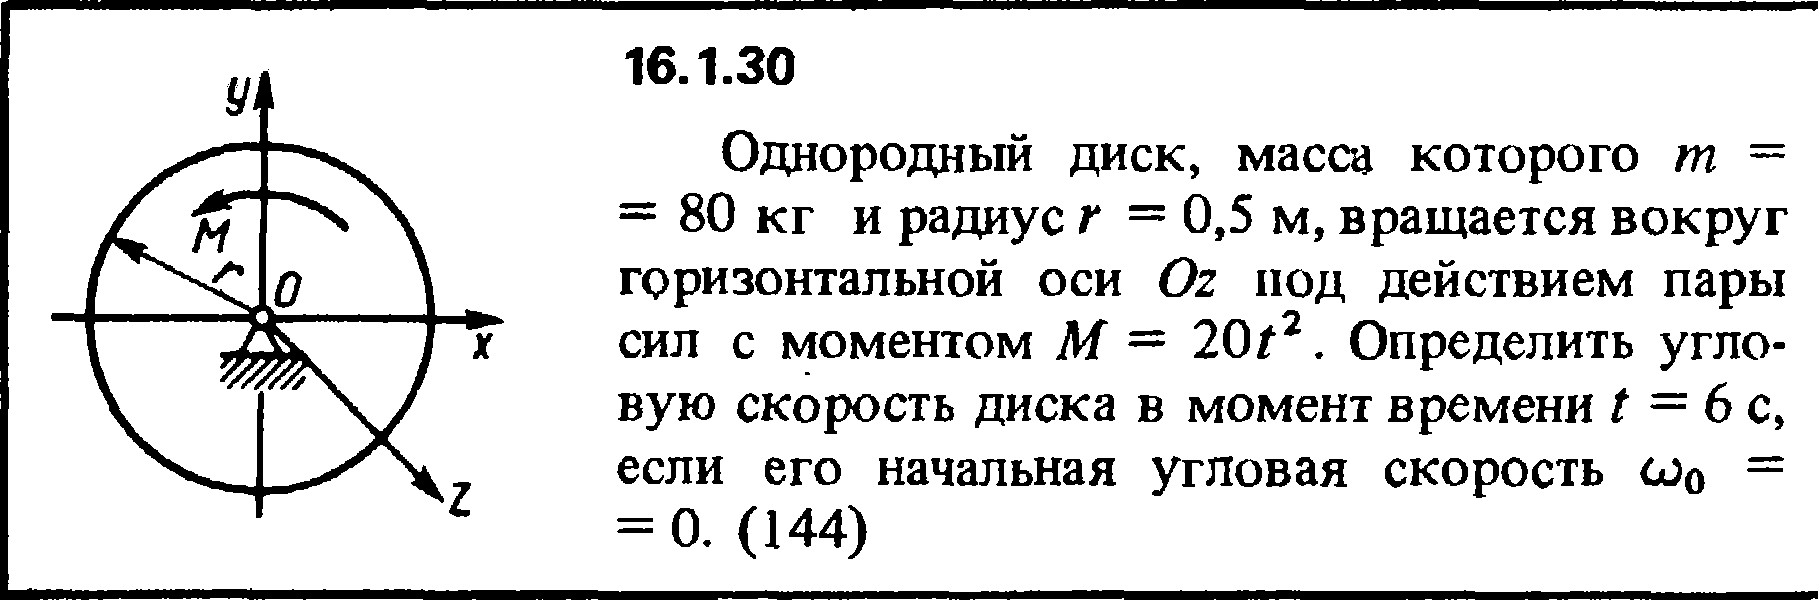 Решение задачи 16.1.30 из сборника Кепе О.Е. 1989 года